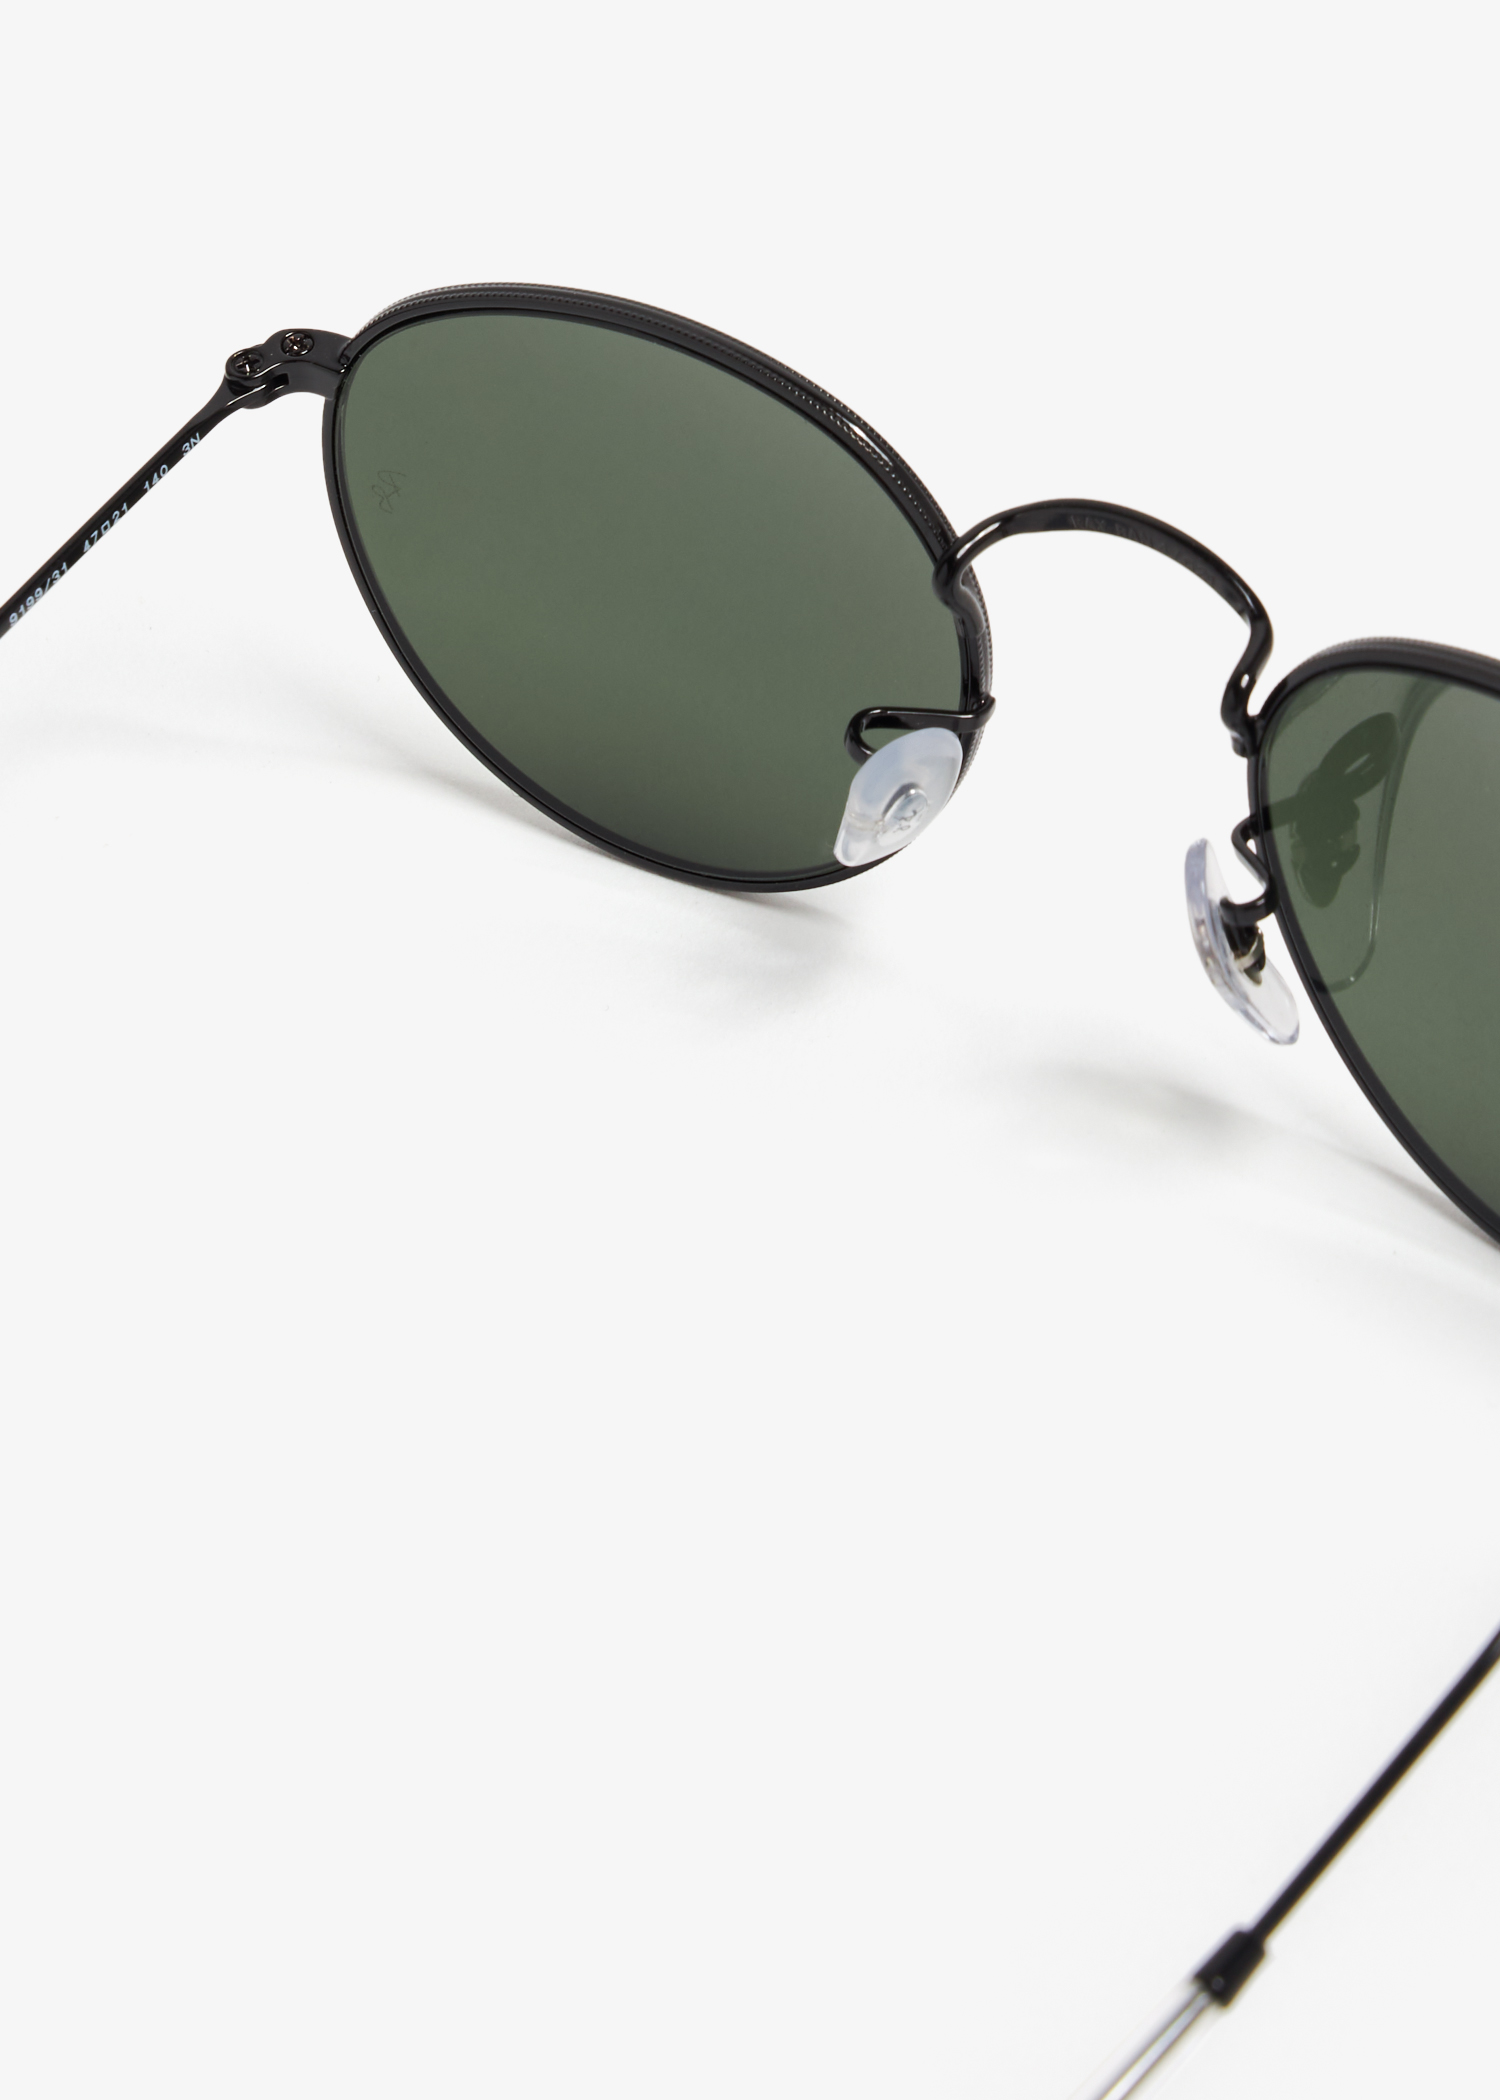 Buy Awestuffs Unisex Round Metal Sunglasses (Gold Frame/Black Lens)  (Regular) Pack of 1 at Amazon.in